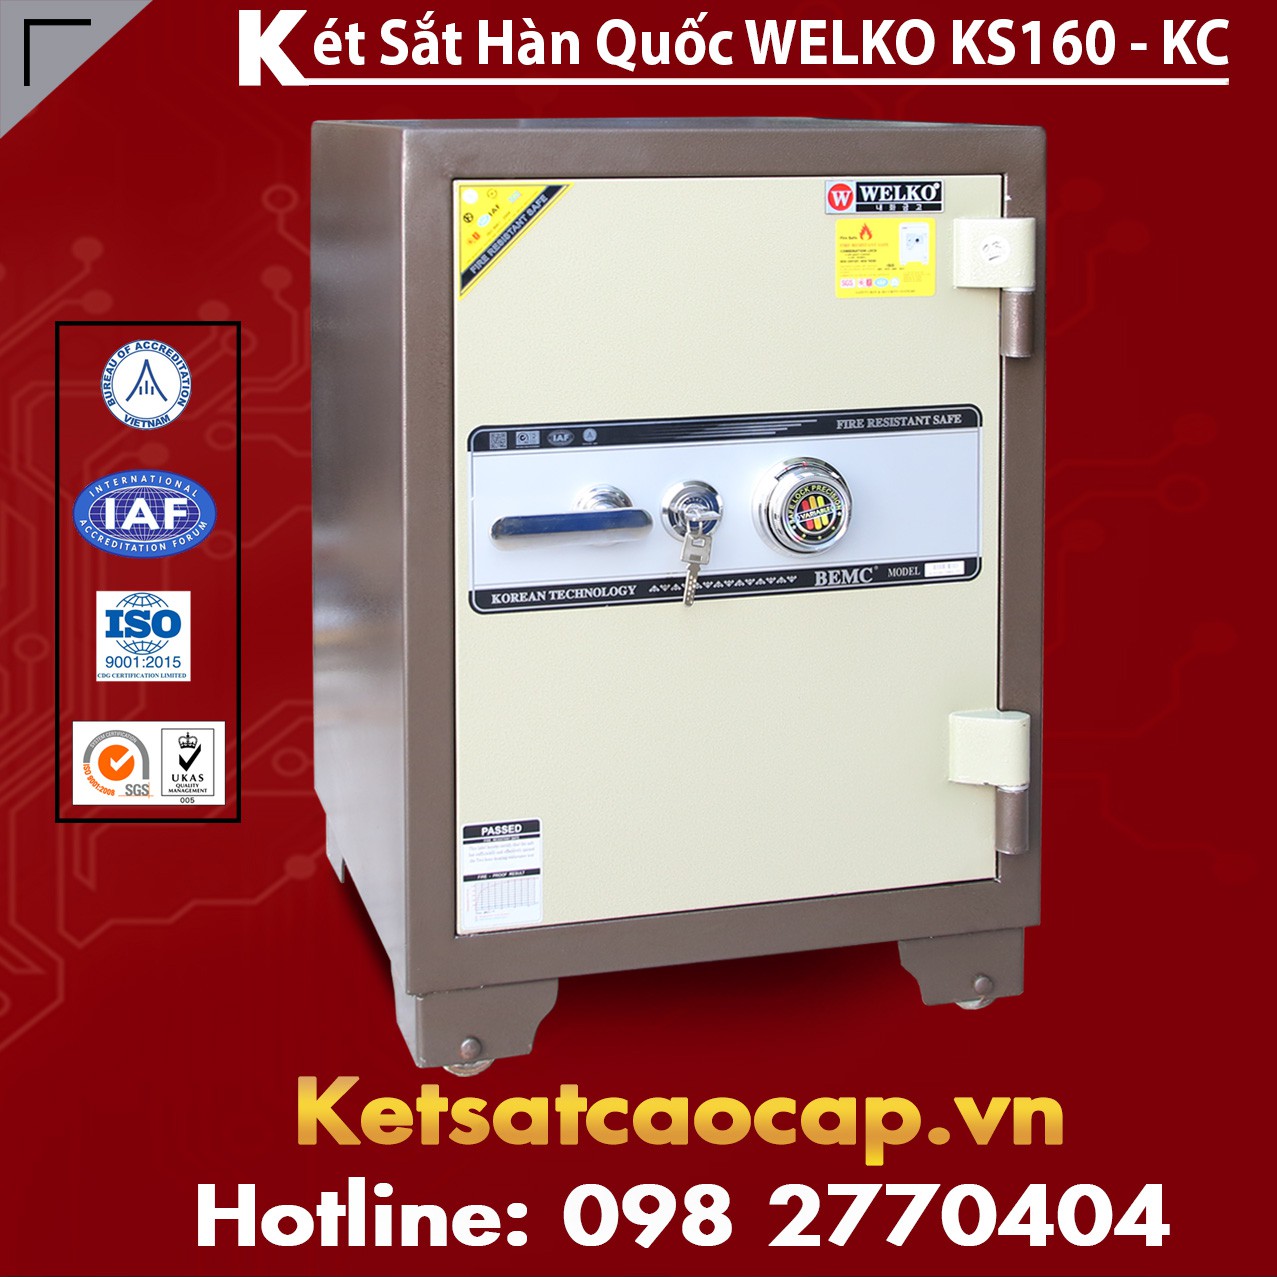 Ket Sat Van Phong Welko KS125 - KC Brown